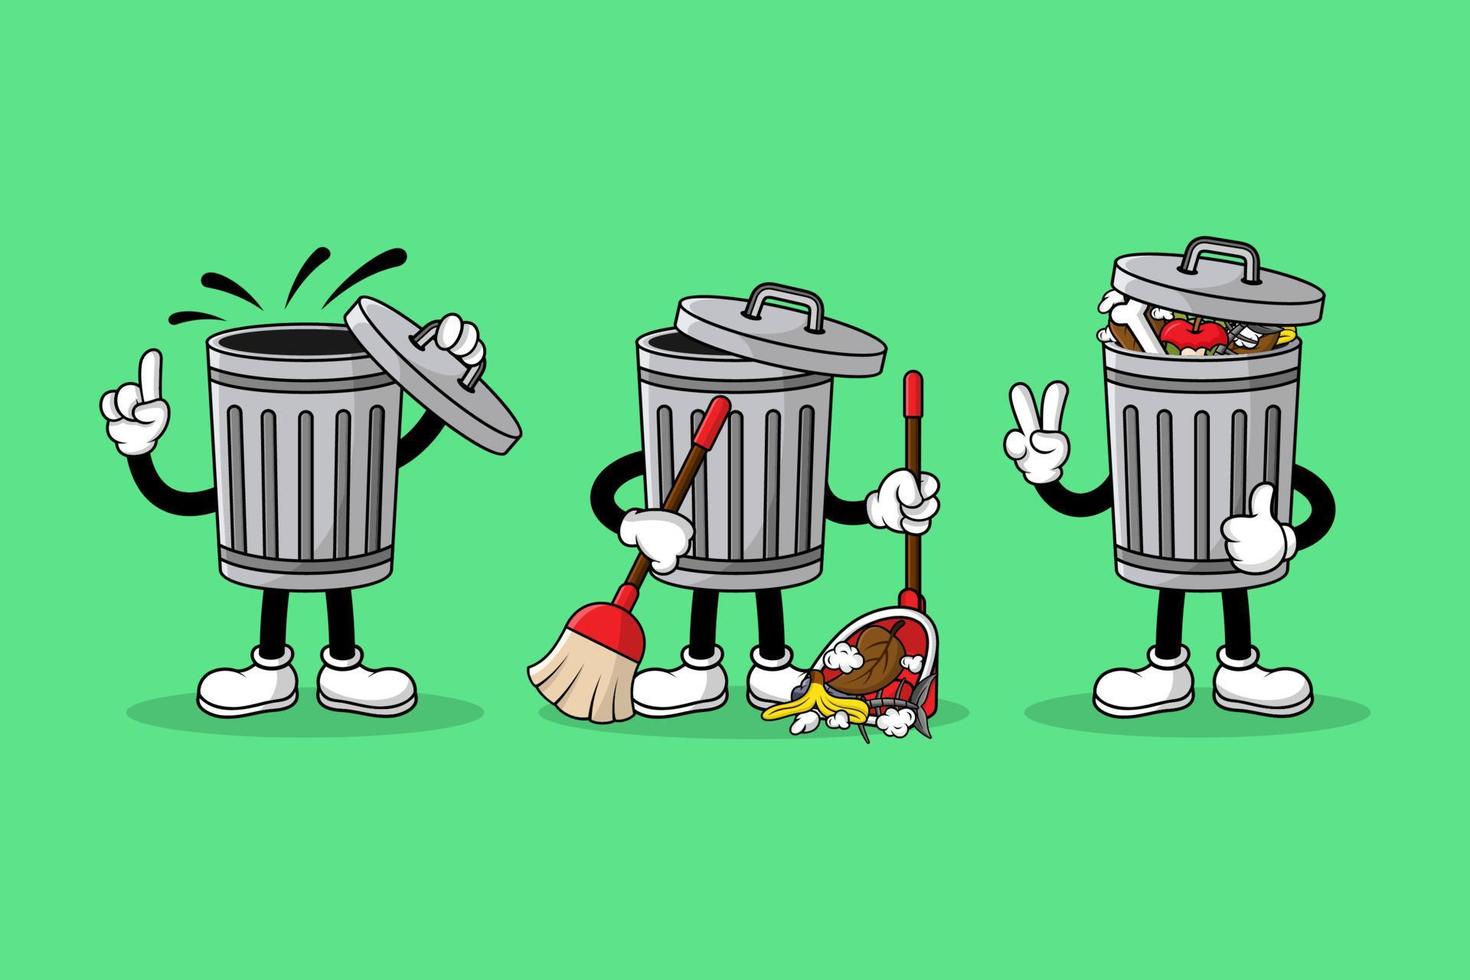 Trash can mascot cartoon character design collection vector